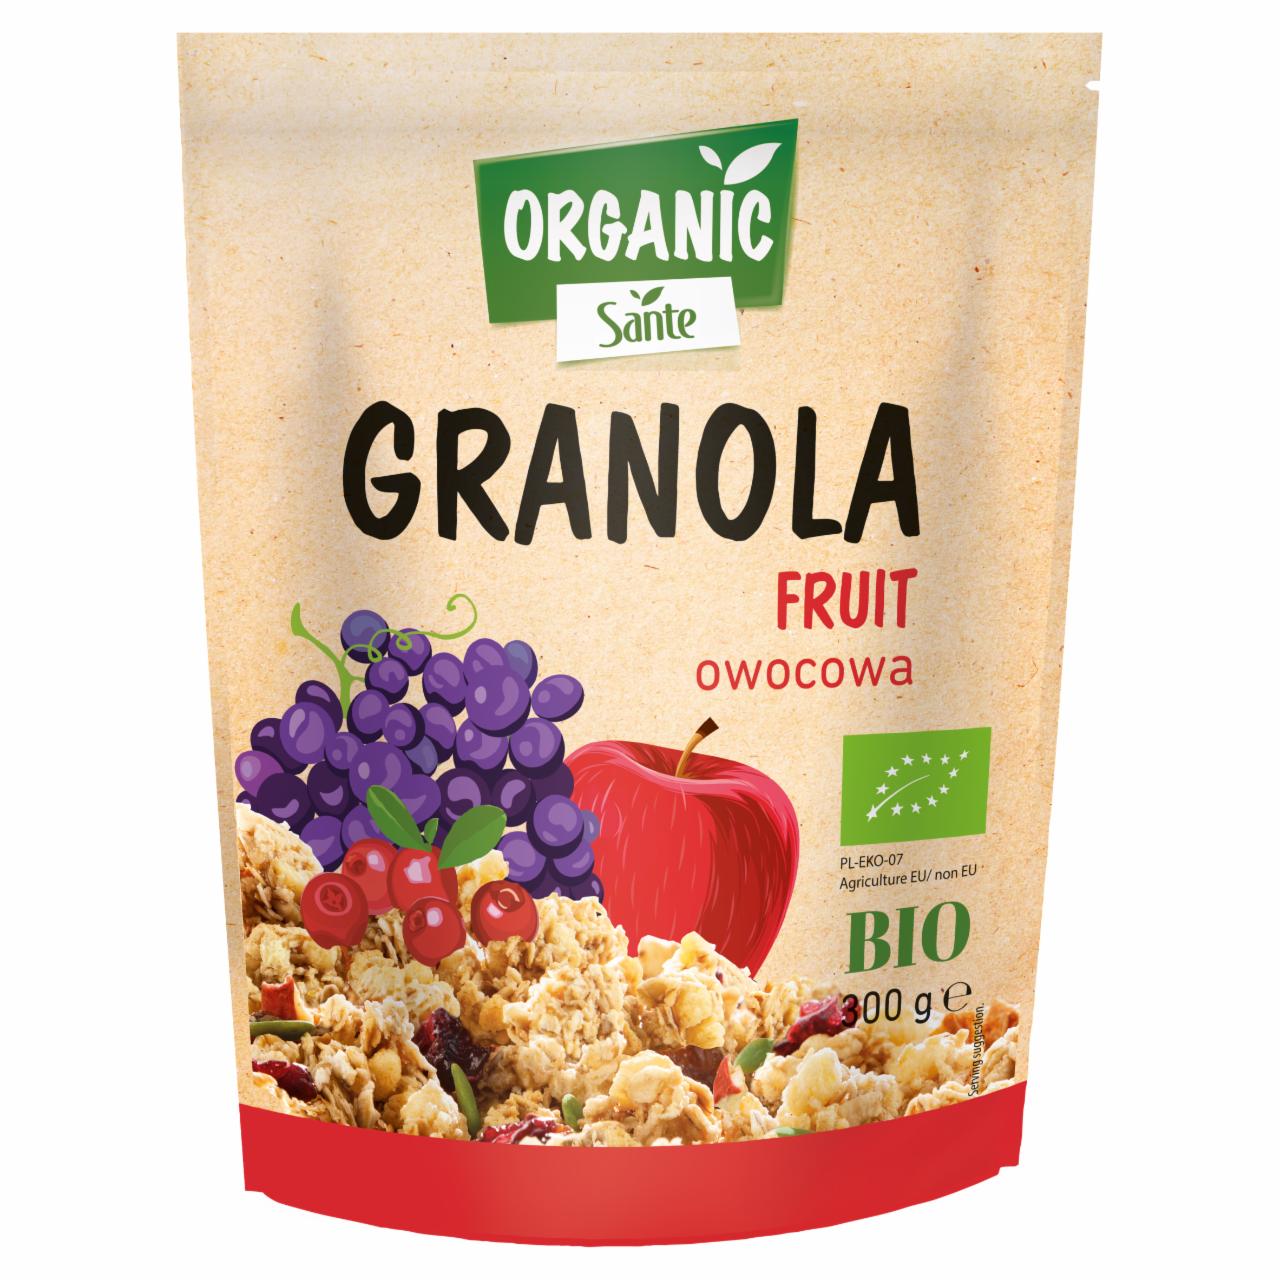 Zdjęcia - Sante Organic Granola owocowa 300 g